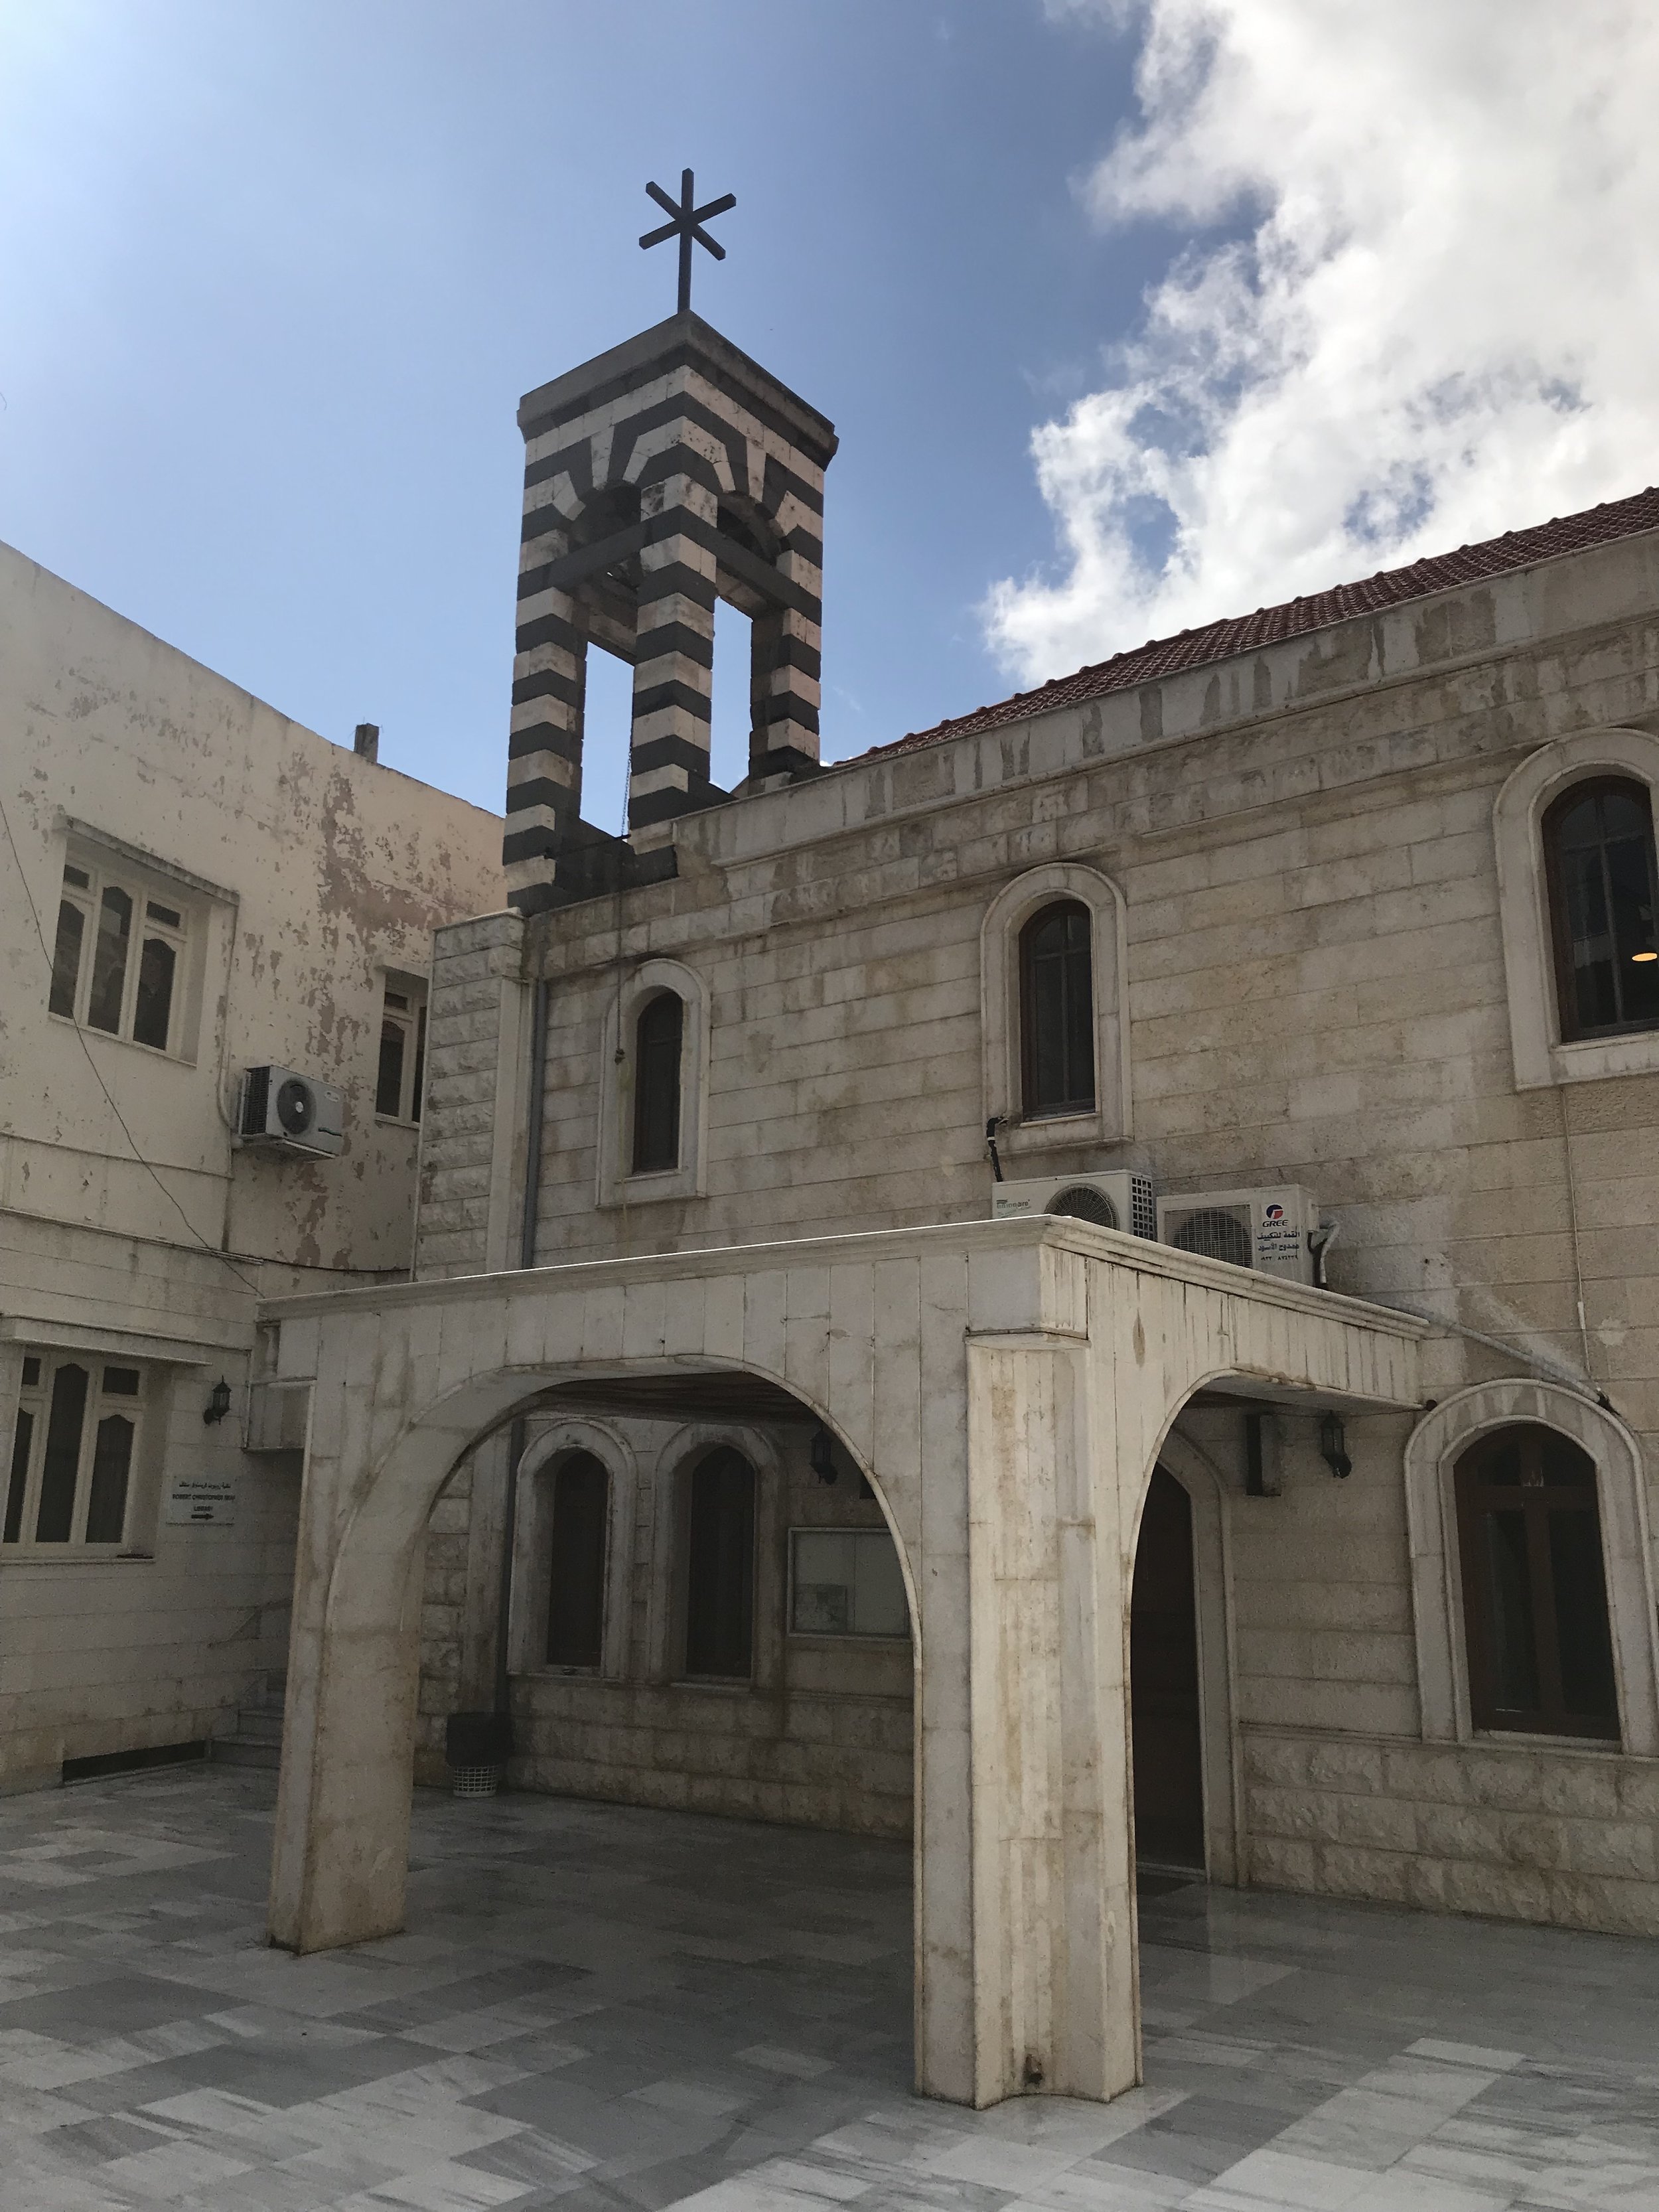  The National Evangelical (Presbyterian) Church of Homs 